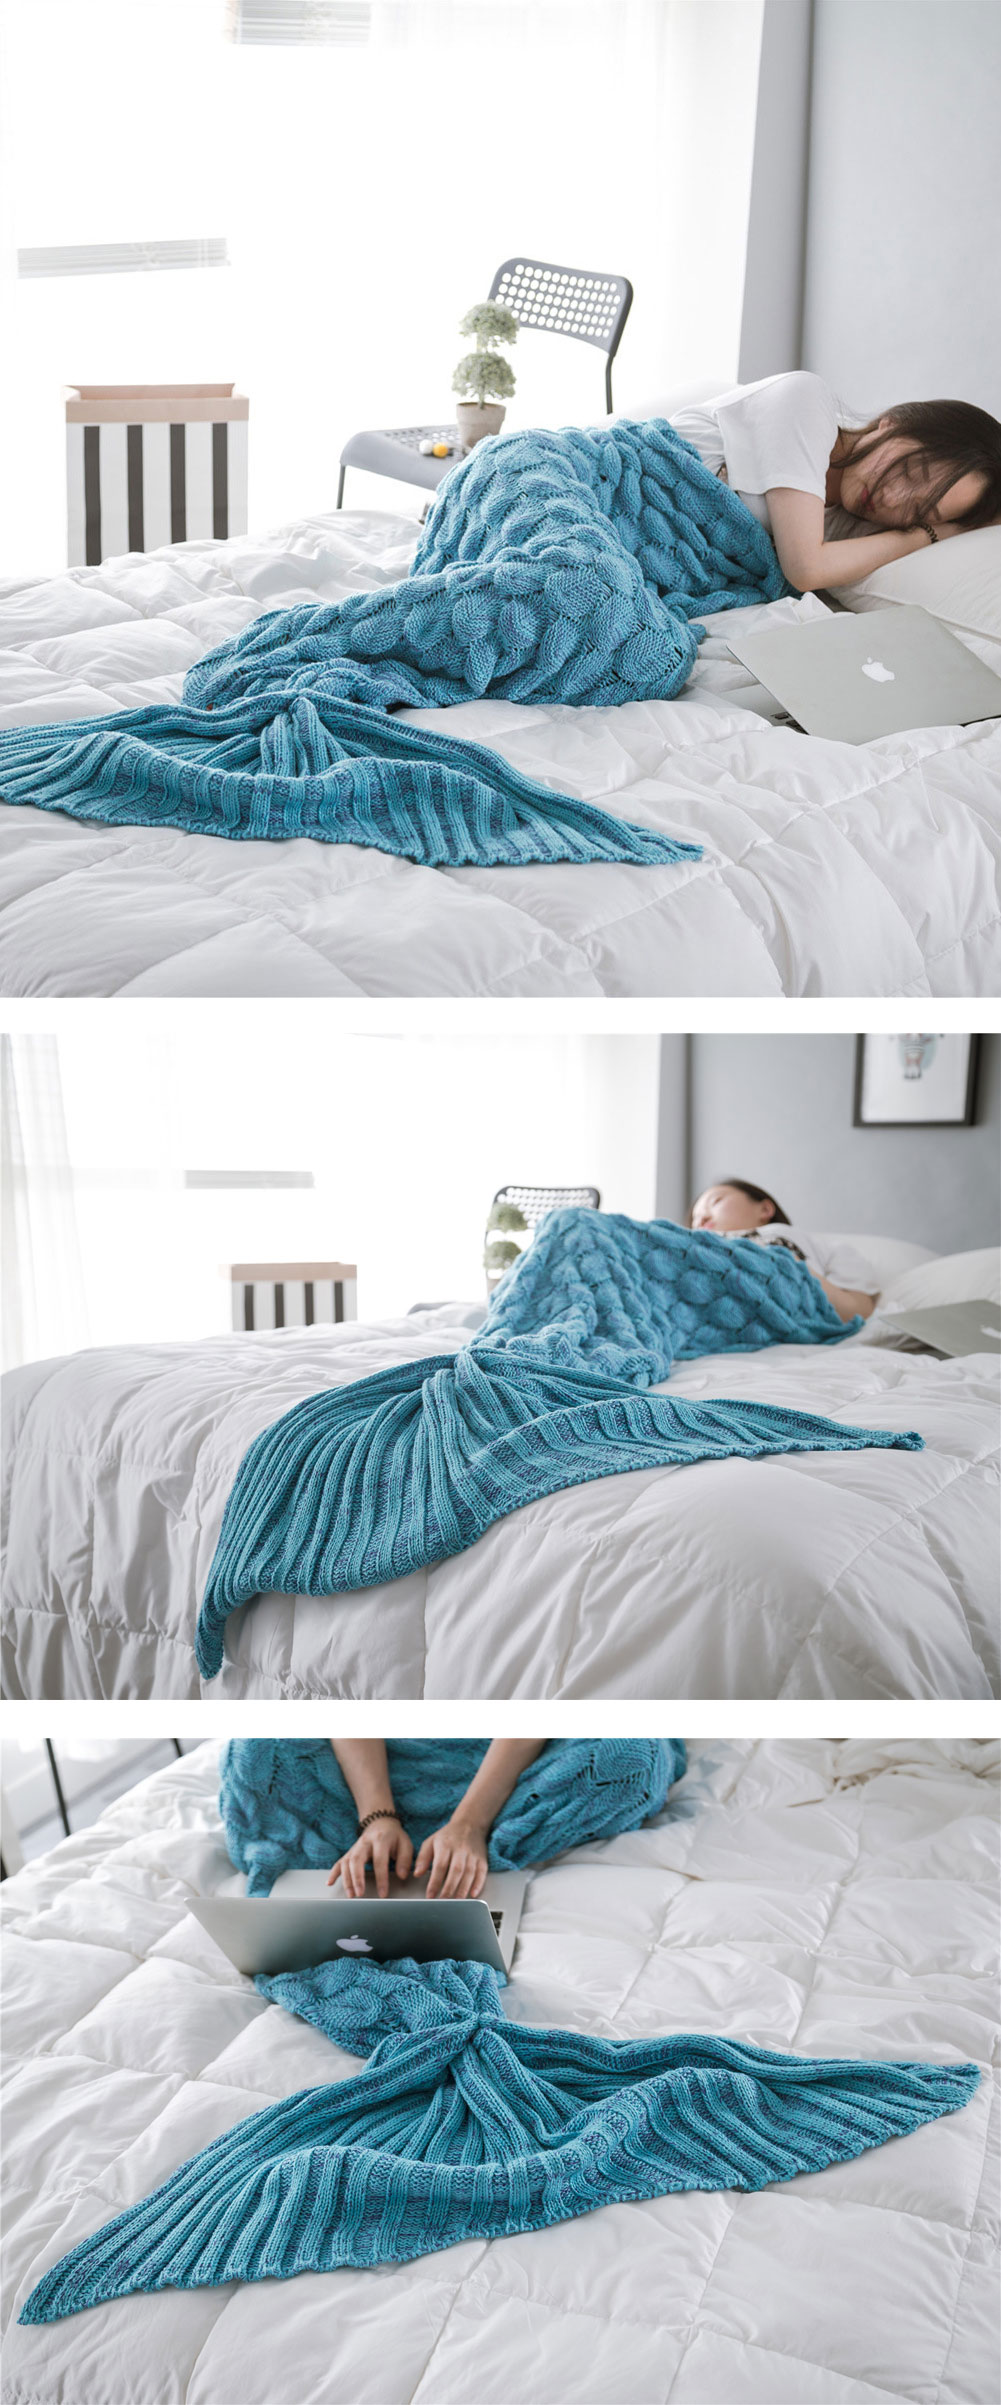 Honana-WX-39-90x190cm-Yarn-Knitting-Mermaid-Tail-Blanket-Fish-Scales-Style-Super-Soft-Sleep-Bag-Bed--1093601-4